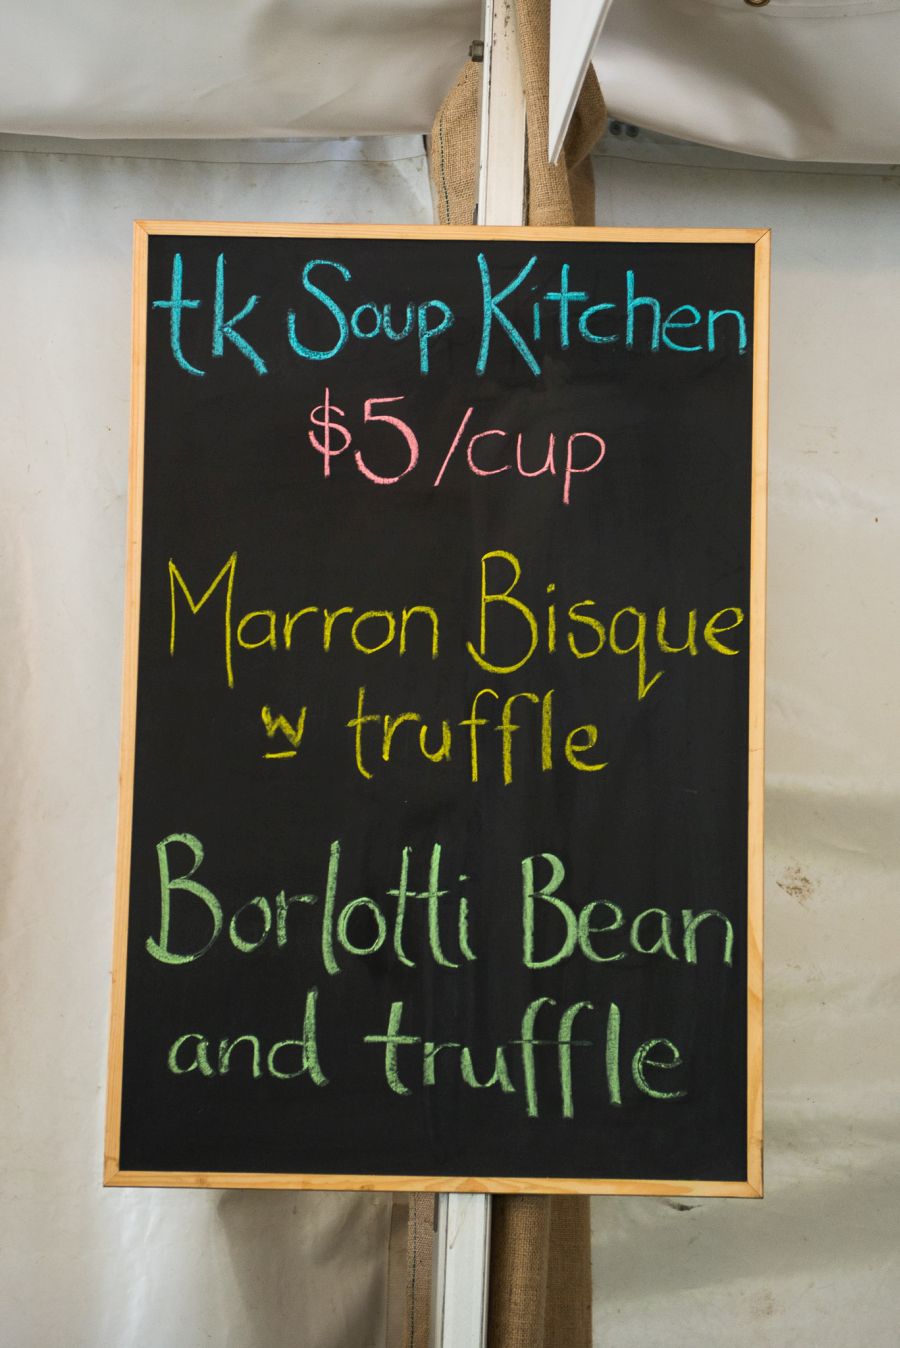 TK Soup Kitchen sign